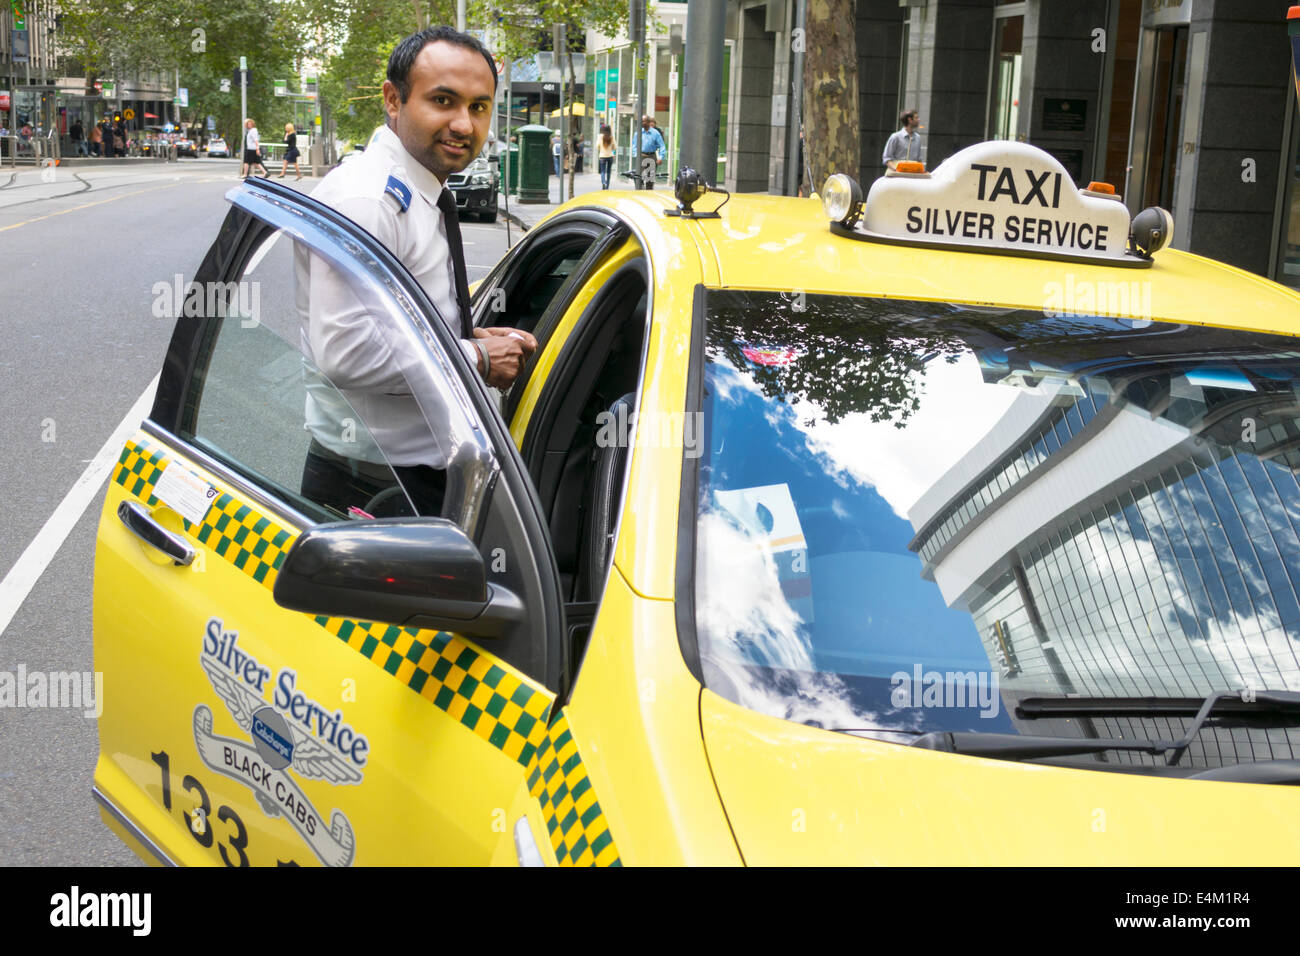 Melbourne Australien, asiatischer Mann, Männer, Taxi, Fahrer, Job, Arbeit, Arbeit, Transport, AU140318067 Stockfoto